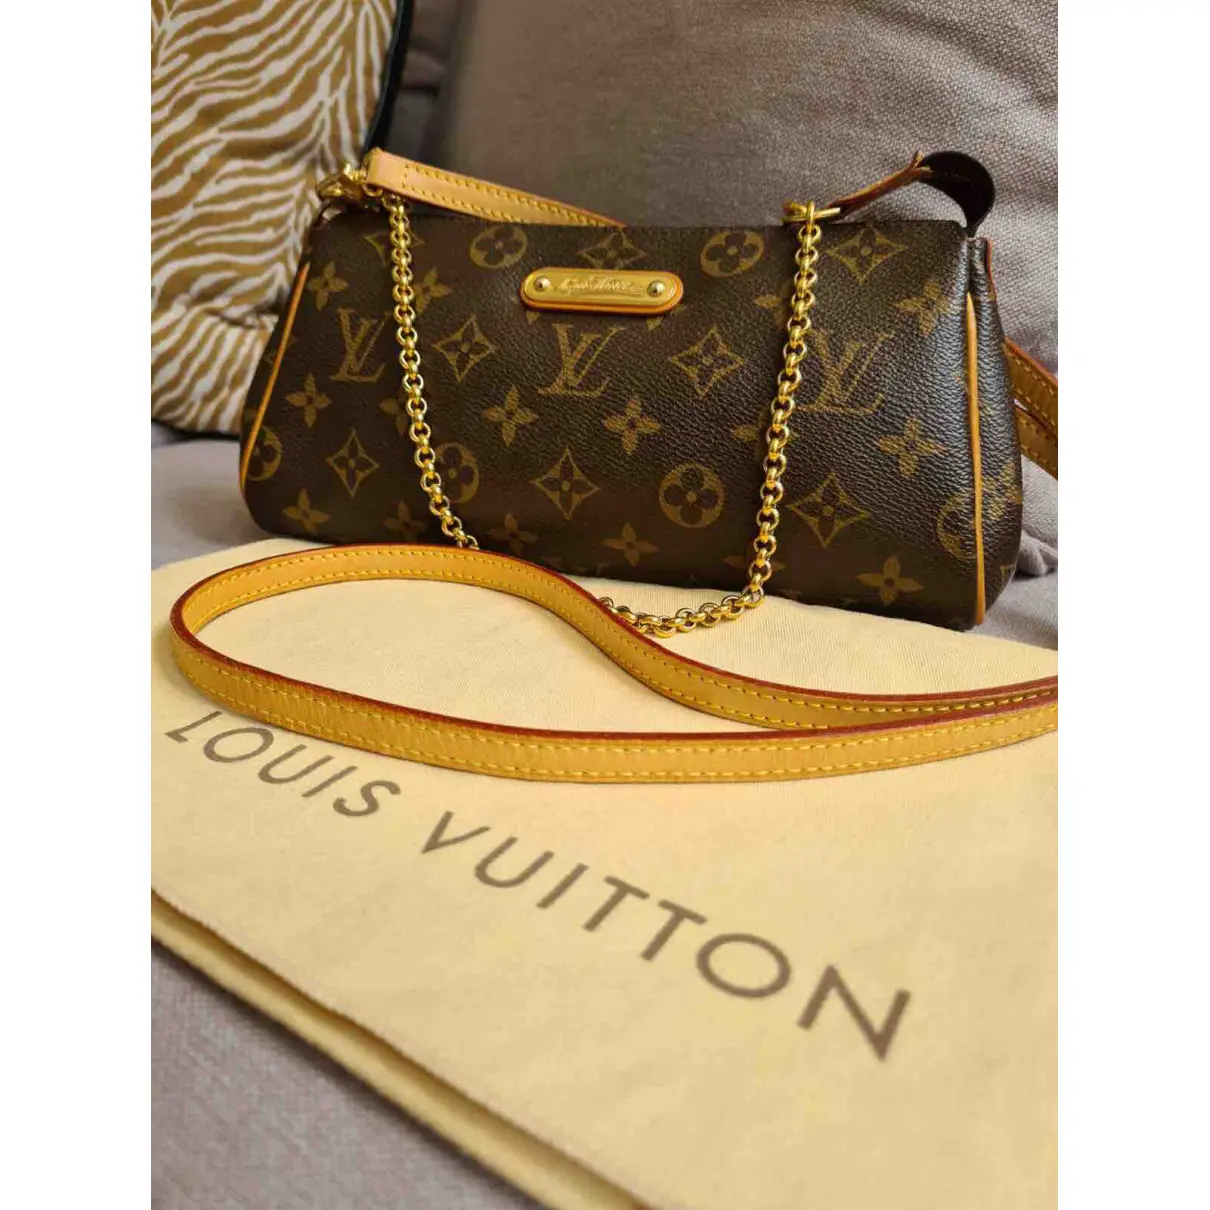 Buy Louis Vuitton Eva leather handbag online